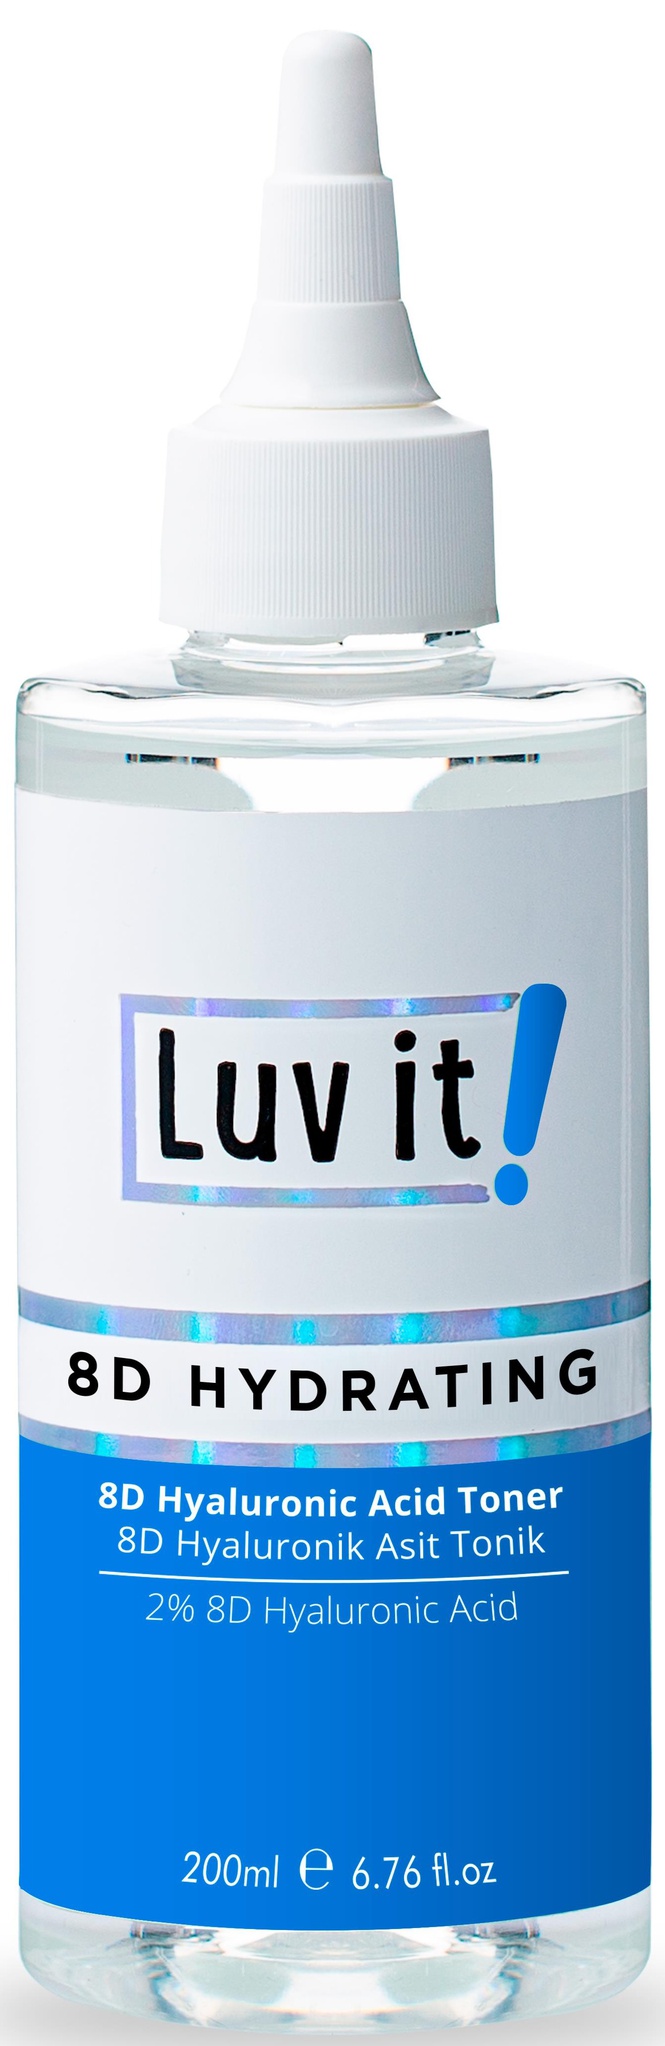 luv it 8D Hydrating Hyaluronic Acid Toner